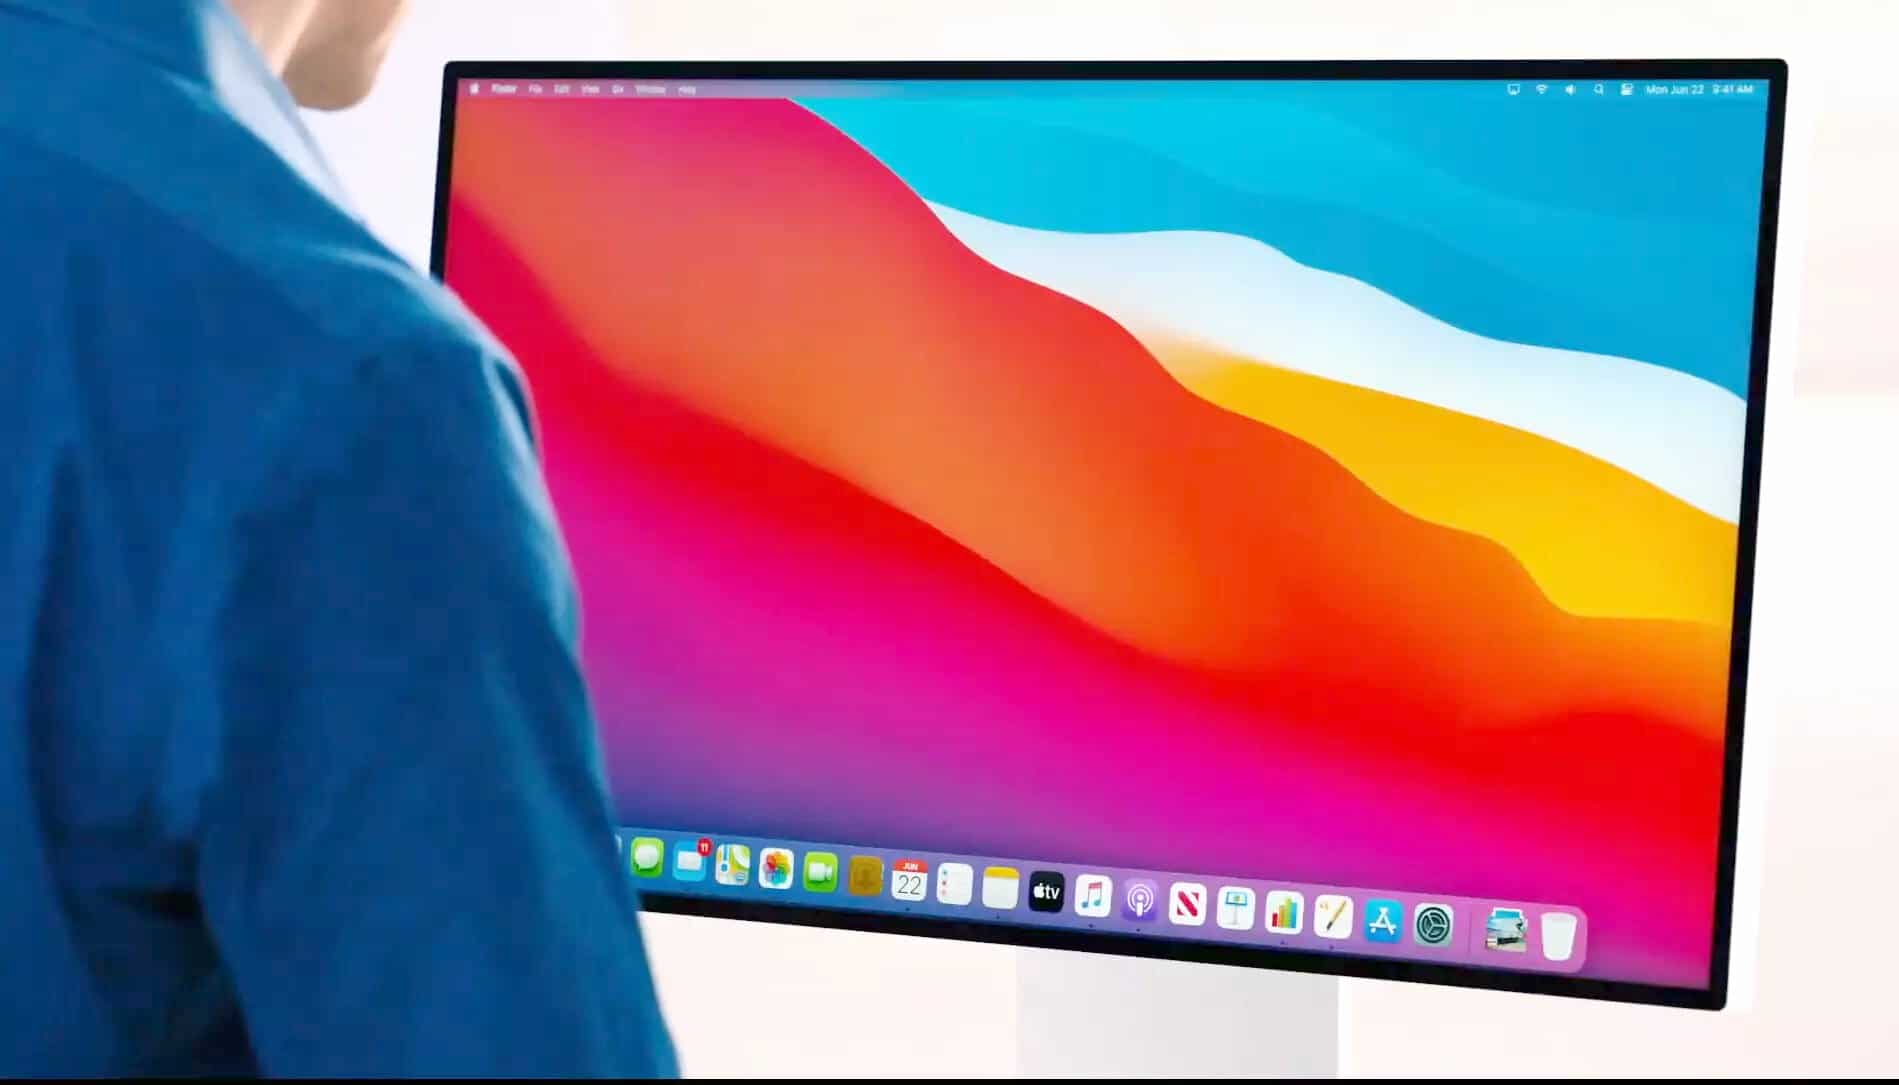 Stardew Valley on M1 Mac: Runs great on Apple Silicon